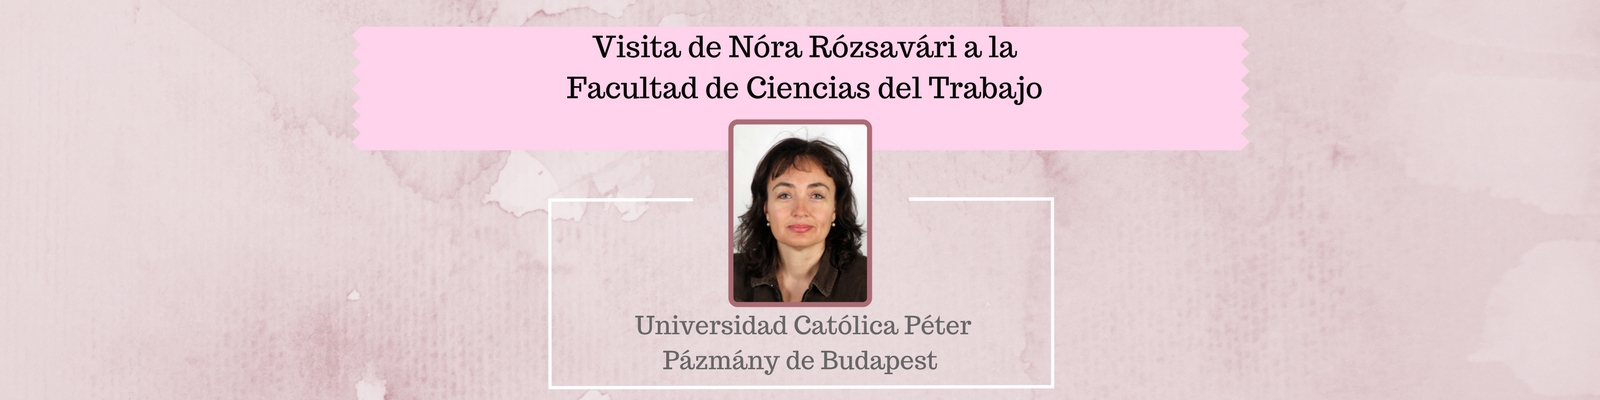 Visita de la Dra. Nóra Rózsavári, profesora de la Universidad Católica Péter Pázmány de Budapest